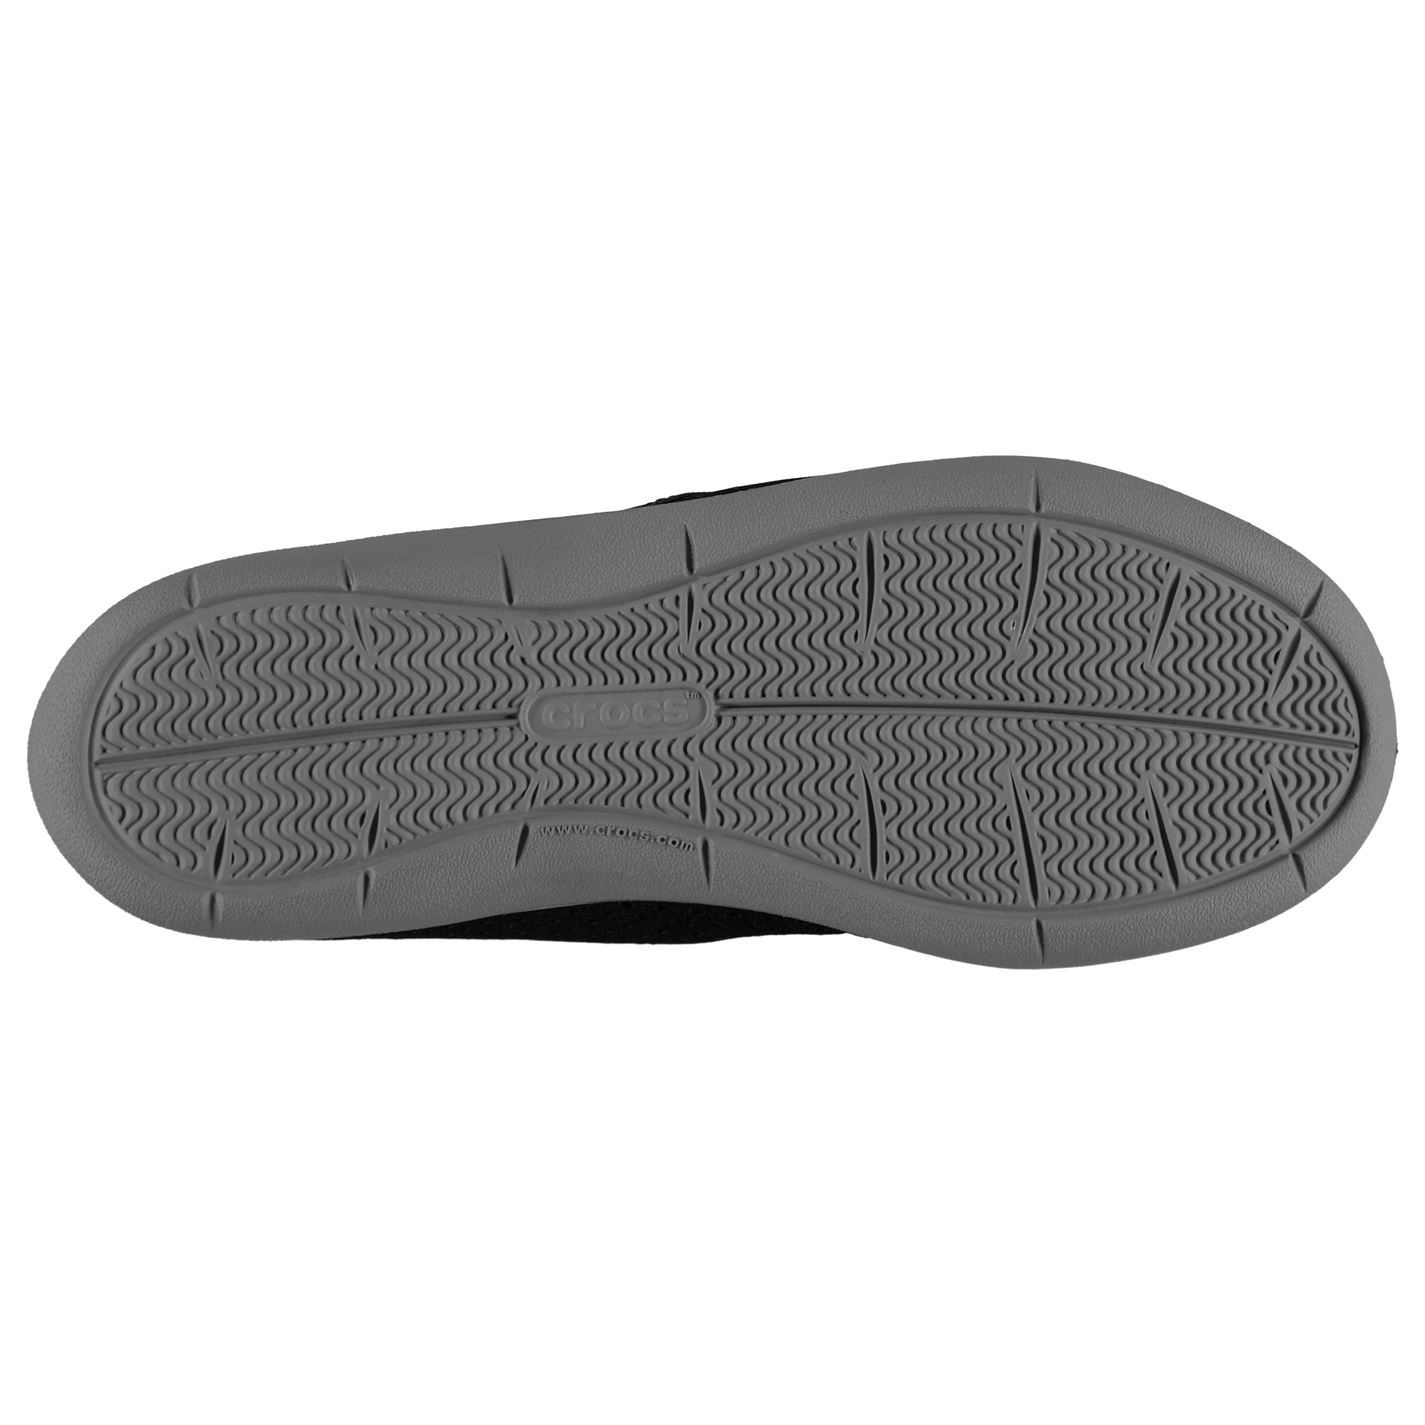 Crocs Womens Kelli Ladies Sandals Slip On Summer Shoes Comfortable Fit